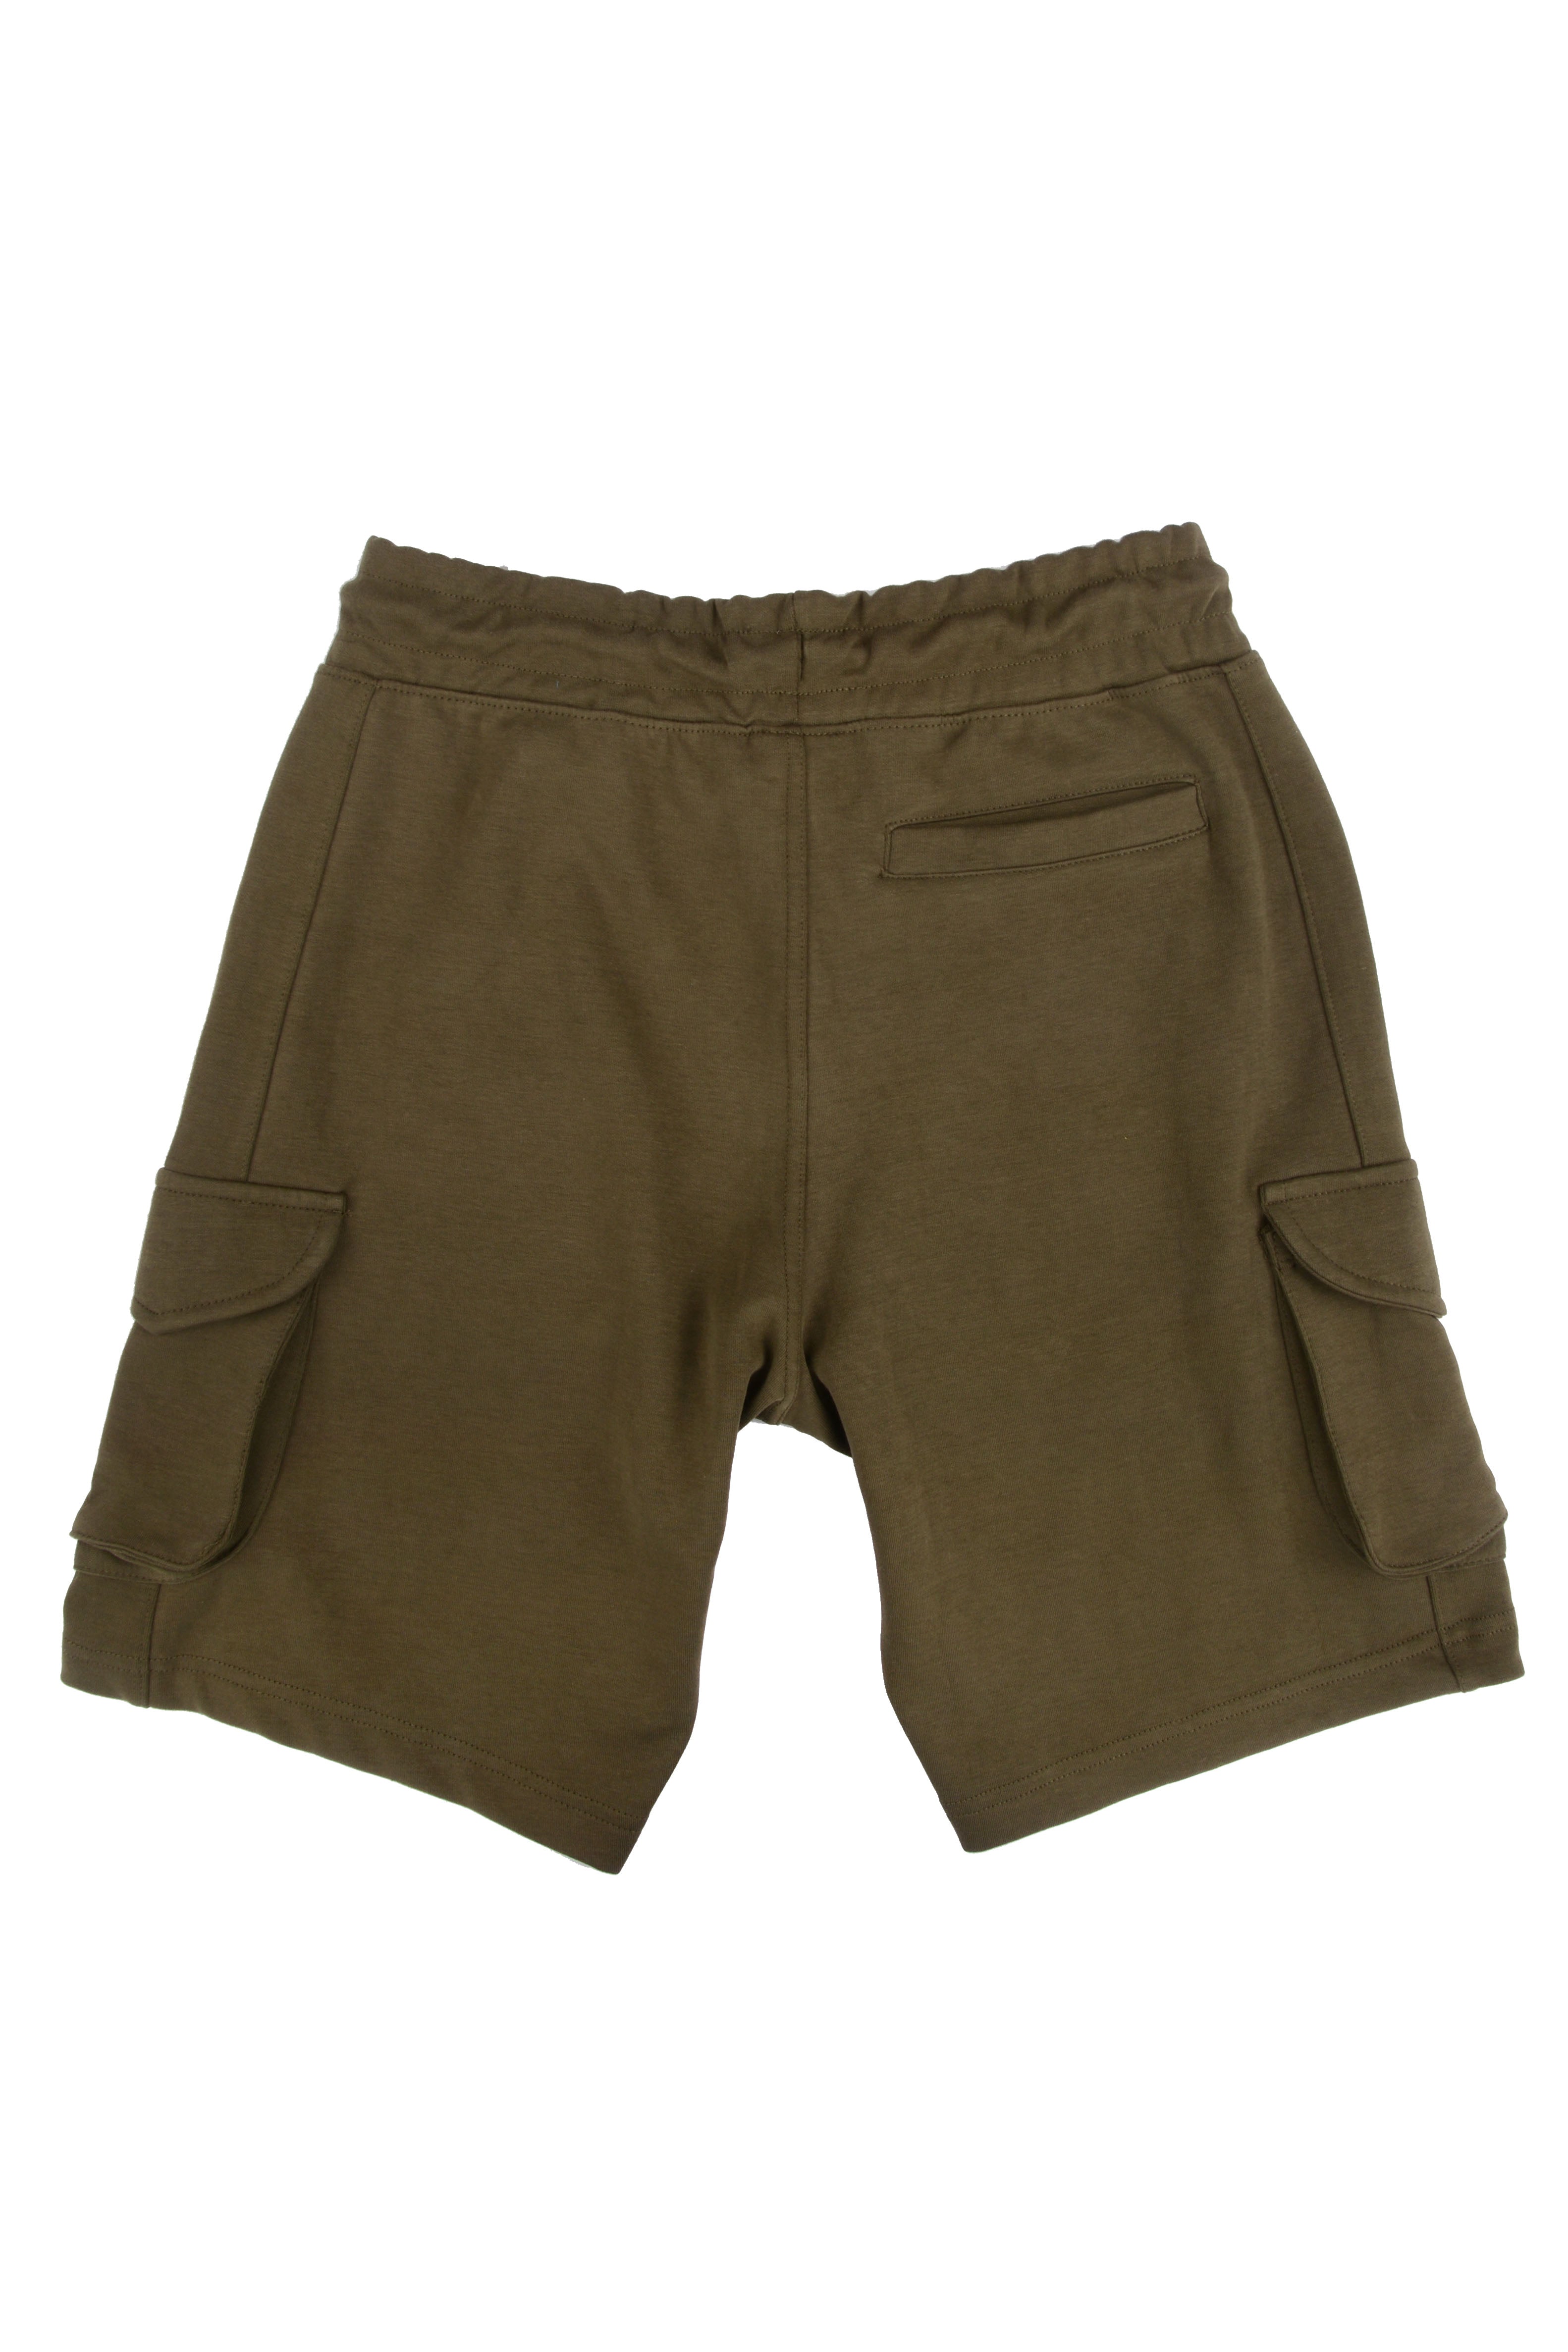 PR Tactical Cargo Shorts - PR104 - Olive